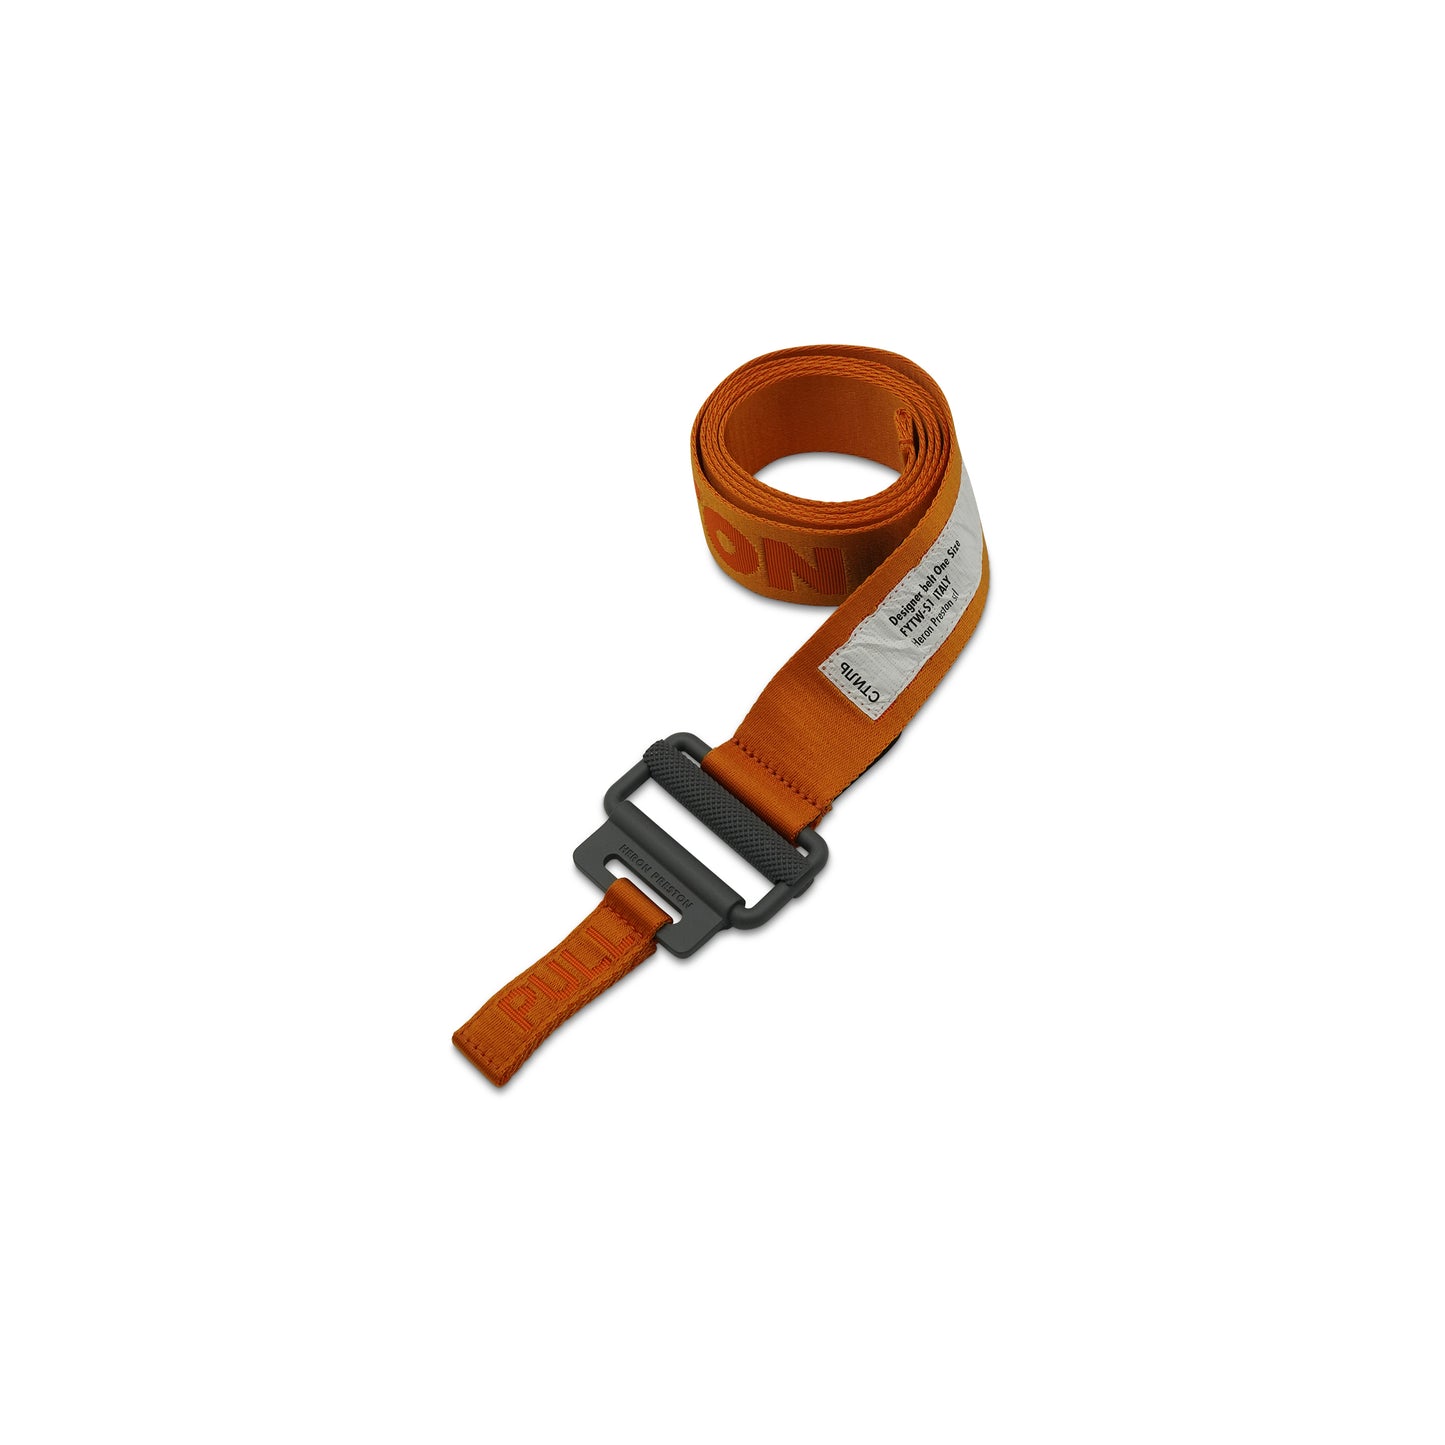 Tape Belt 4Cm Classic Buckle Belt in Orange